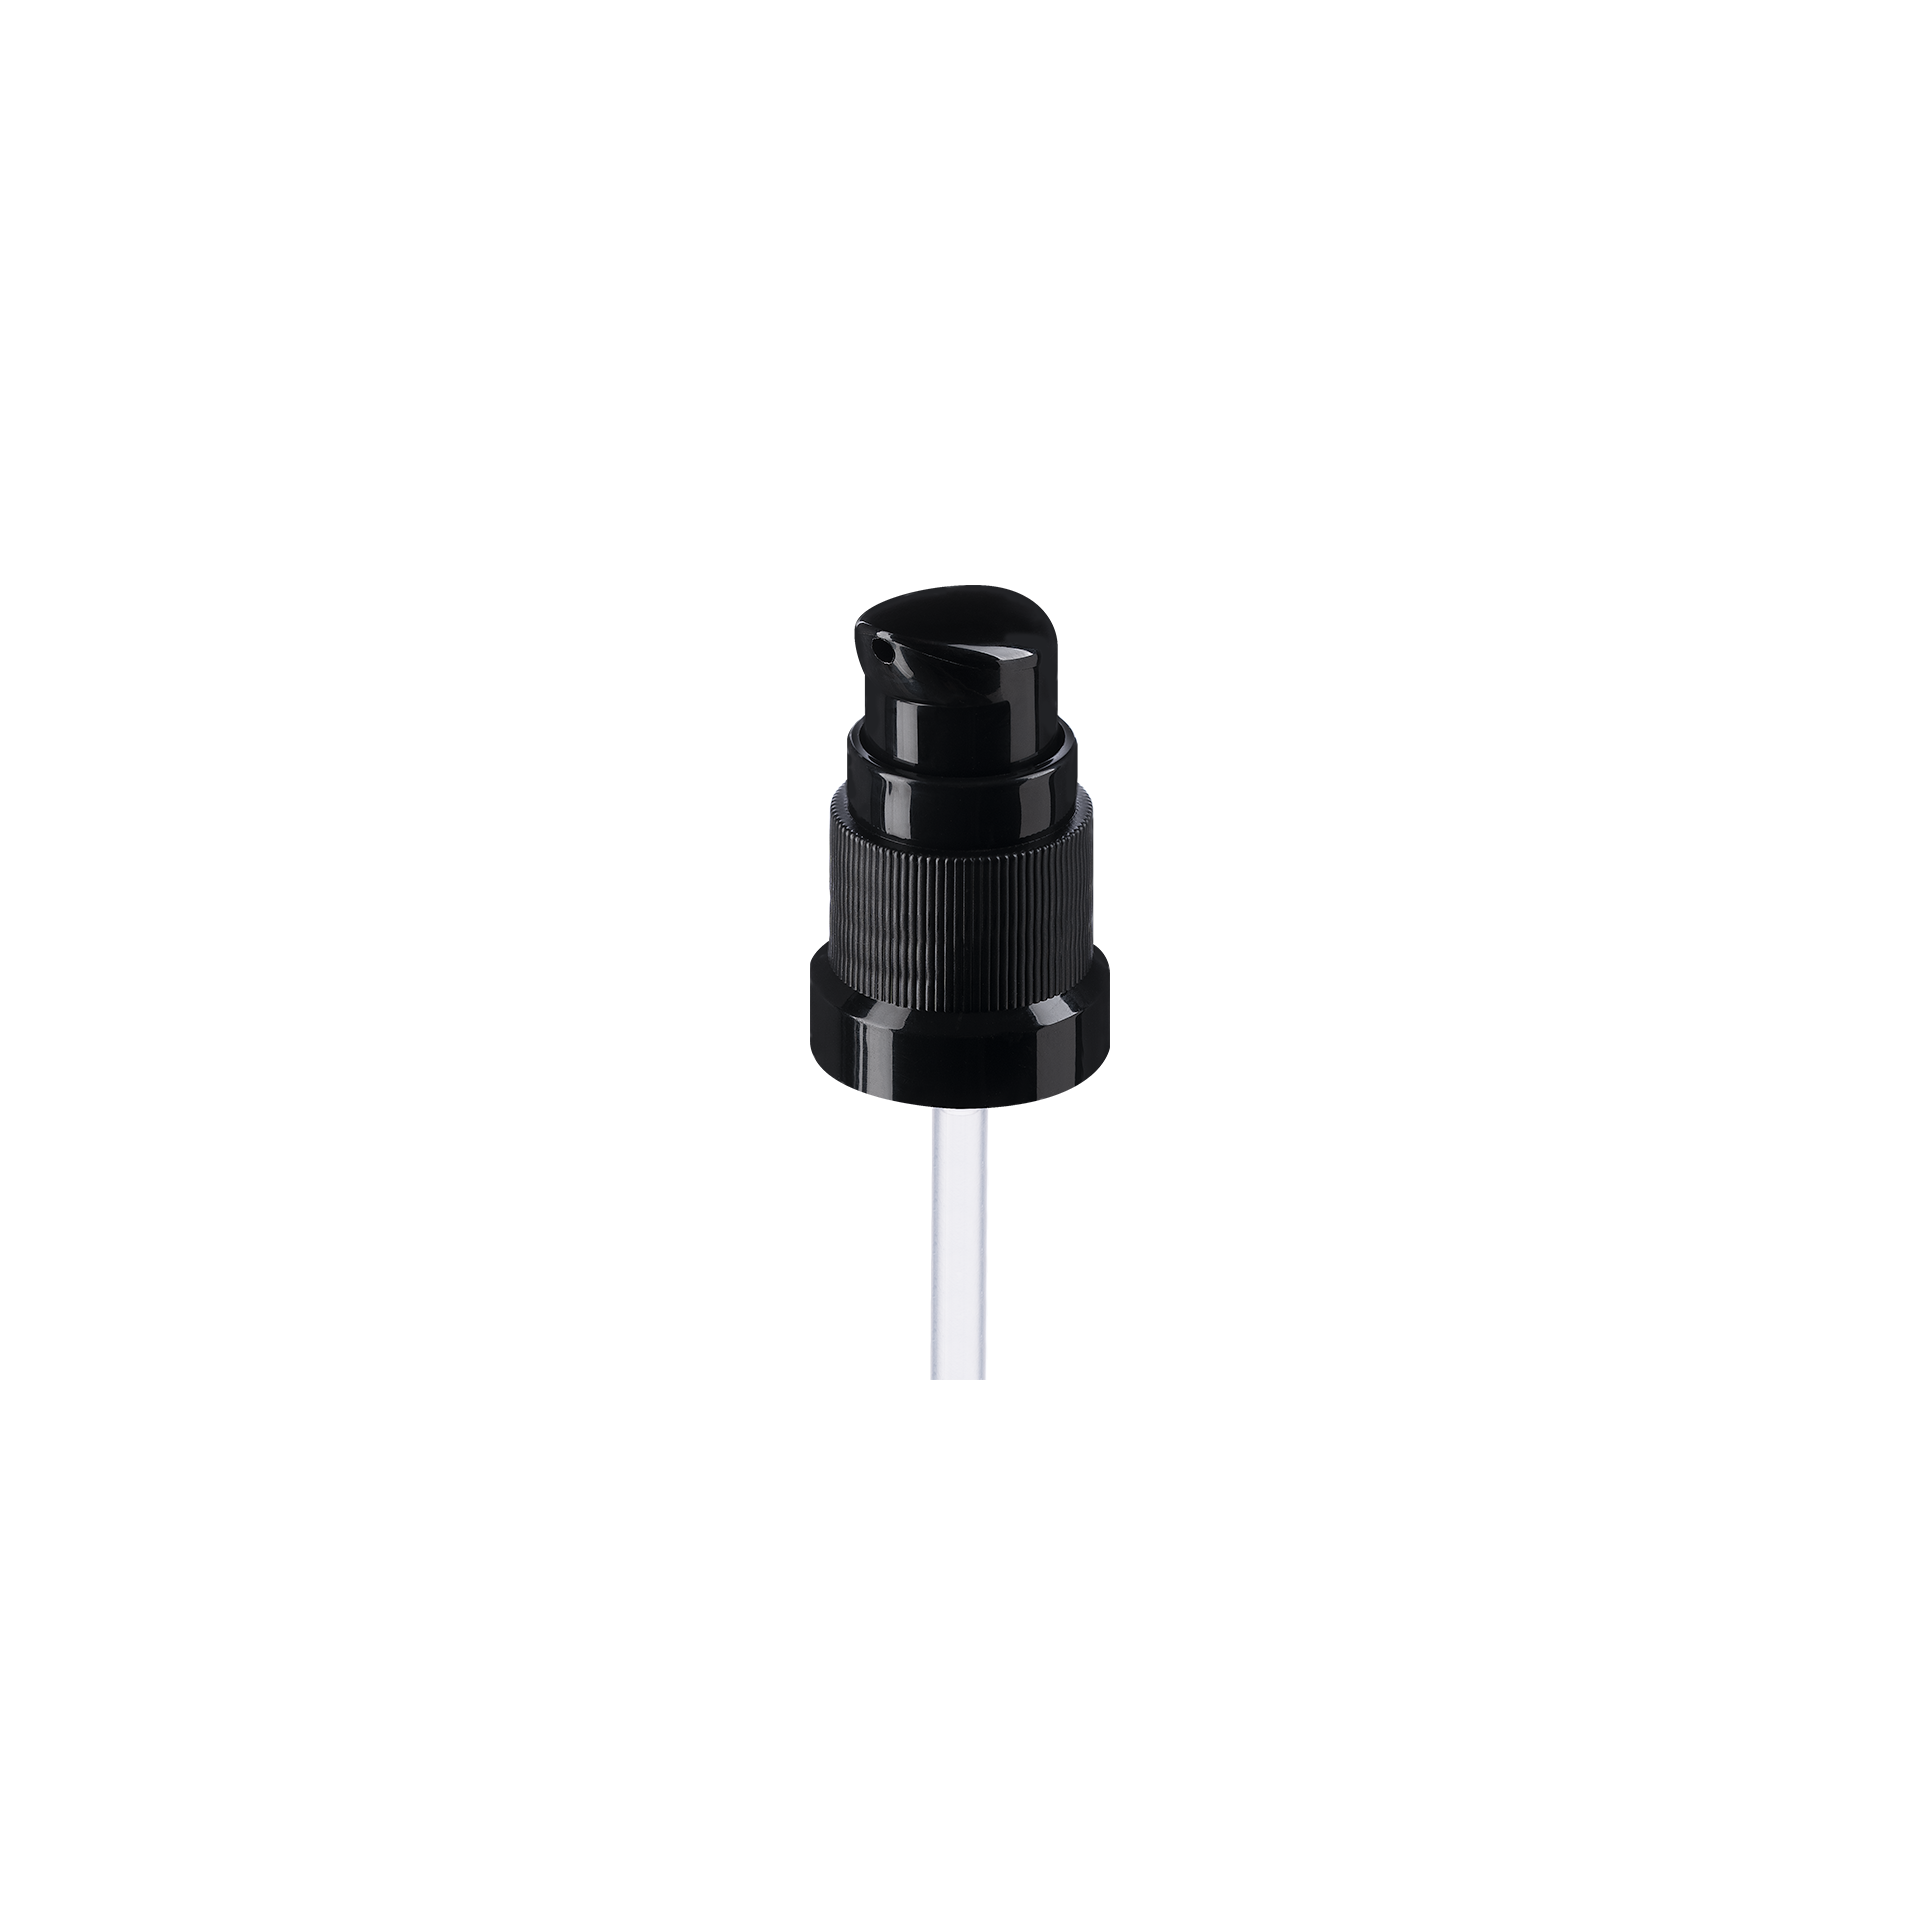 Lotion pump Metropolitan DIN18, PP, black, dose 0.10ml, black security clip (Ginger 30)